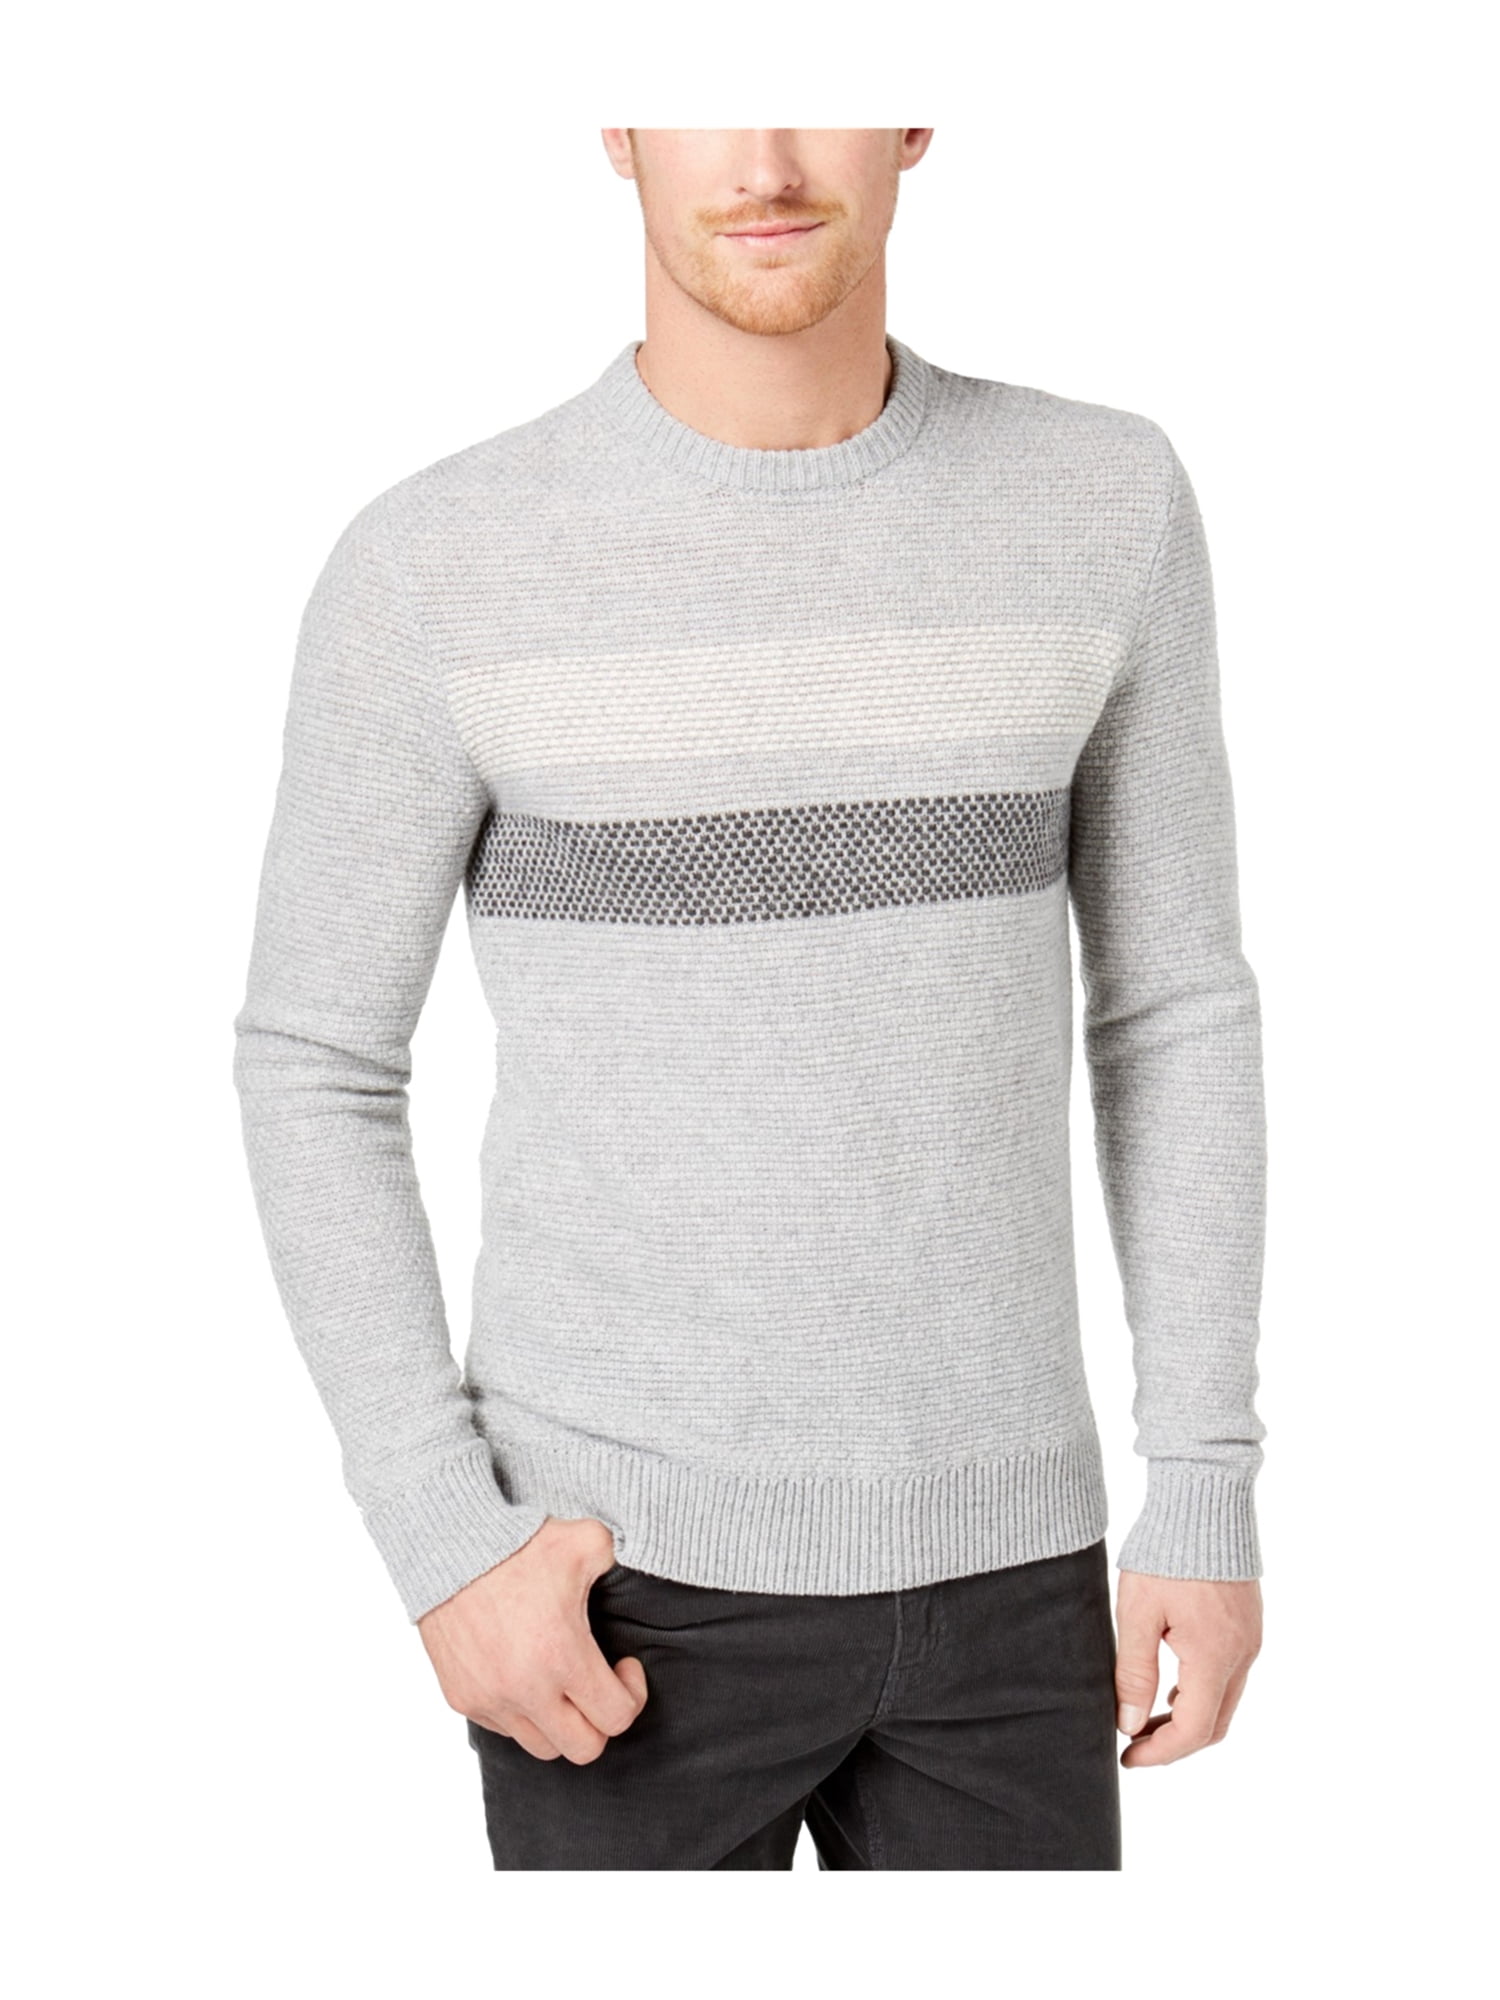 Michael Kors - Michael Kors Mens Stripe Pullover Sweater - Walmart.com ...